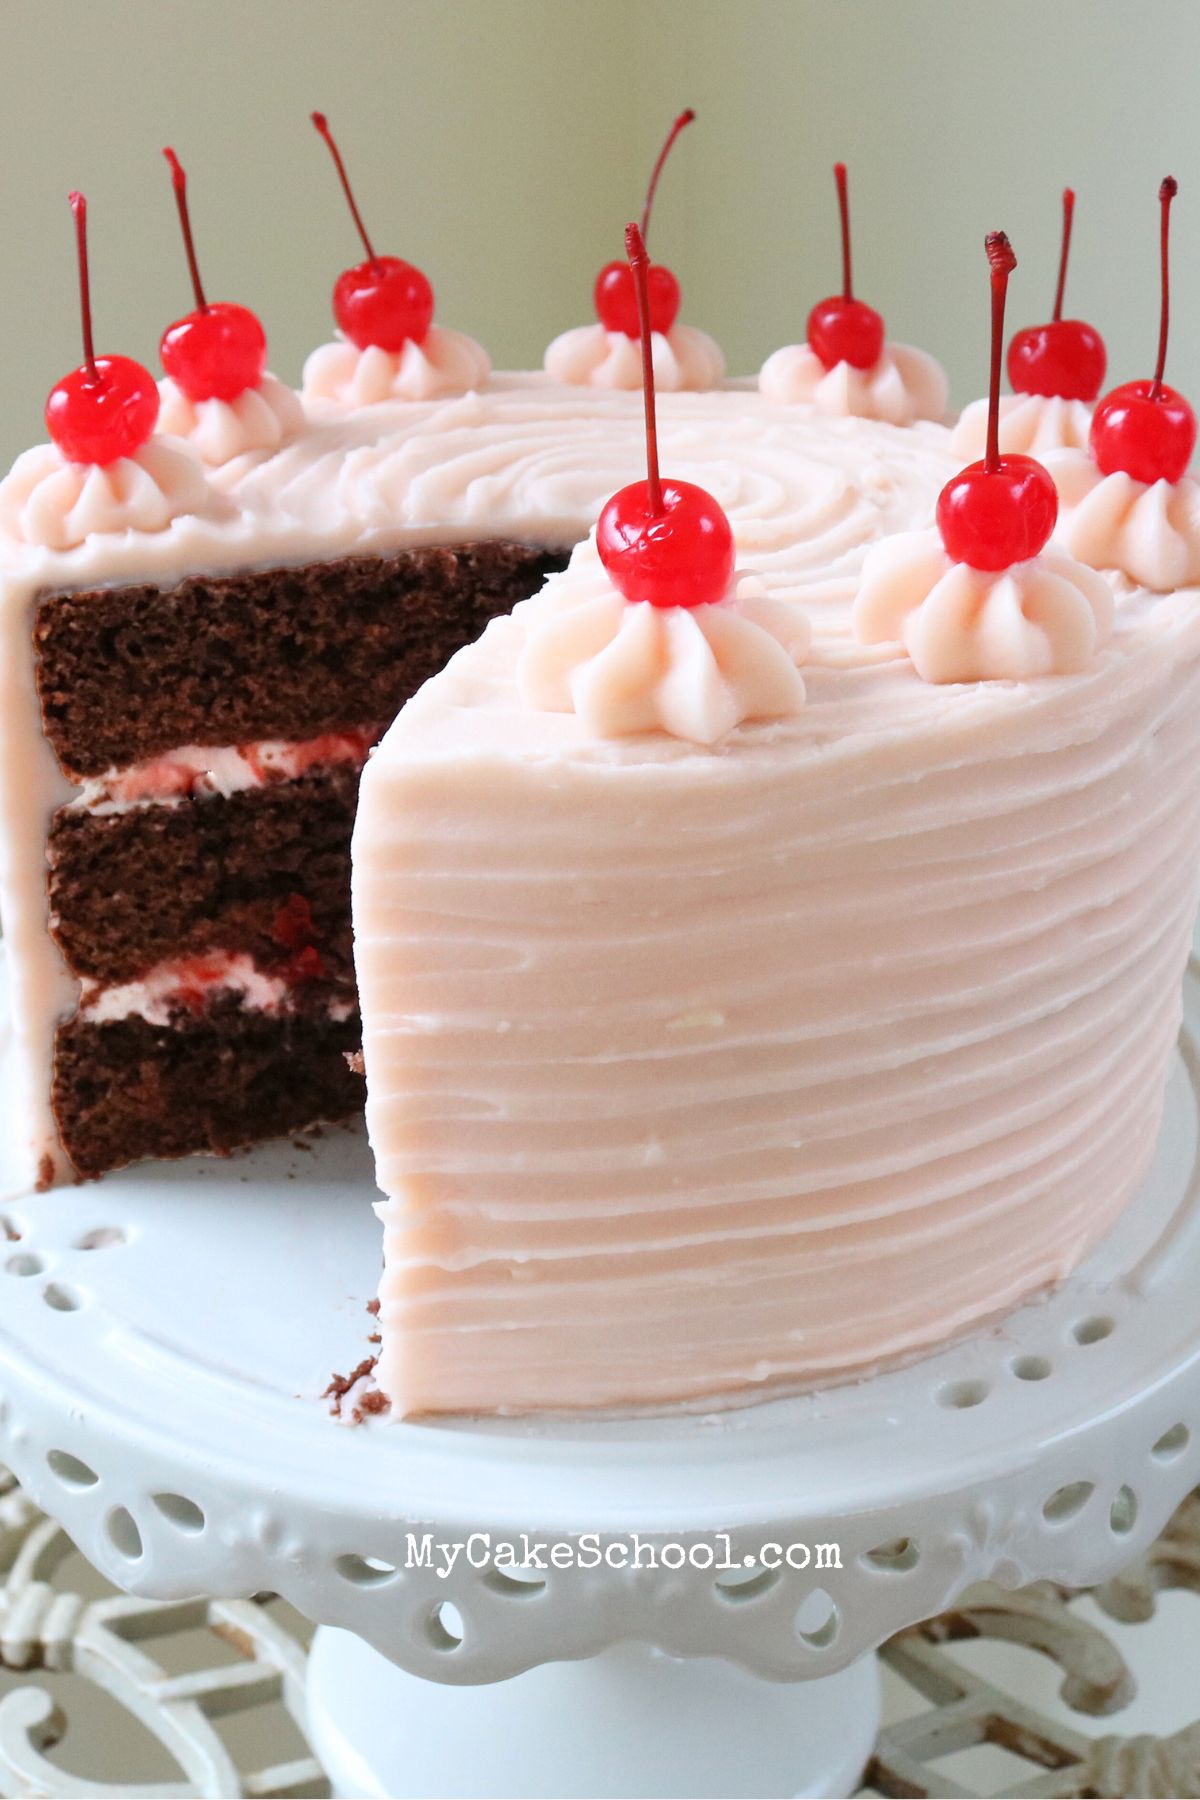 Cherry Cherry Cake, with cherry cream cheese frosting, topped with maraschino cherries, on white pedestal.